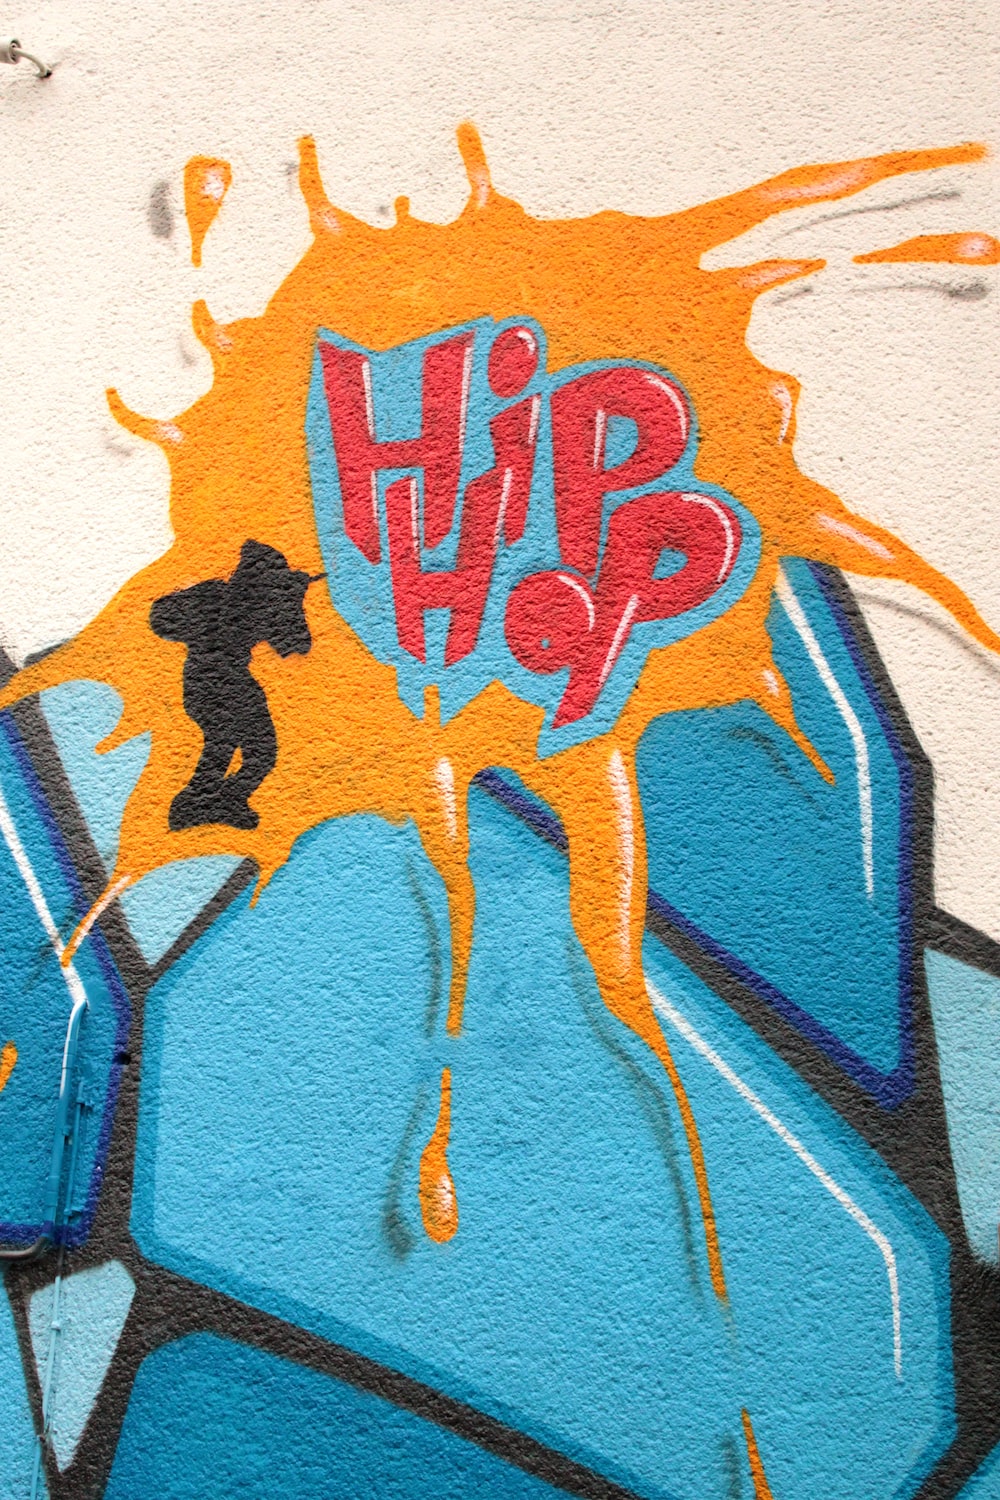 Hip hop graffiti photo â free graffiti image on